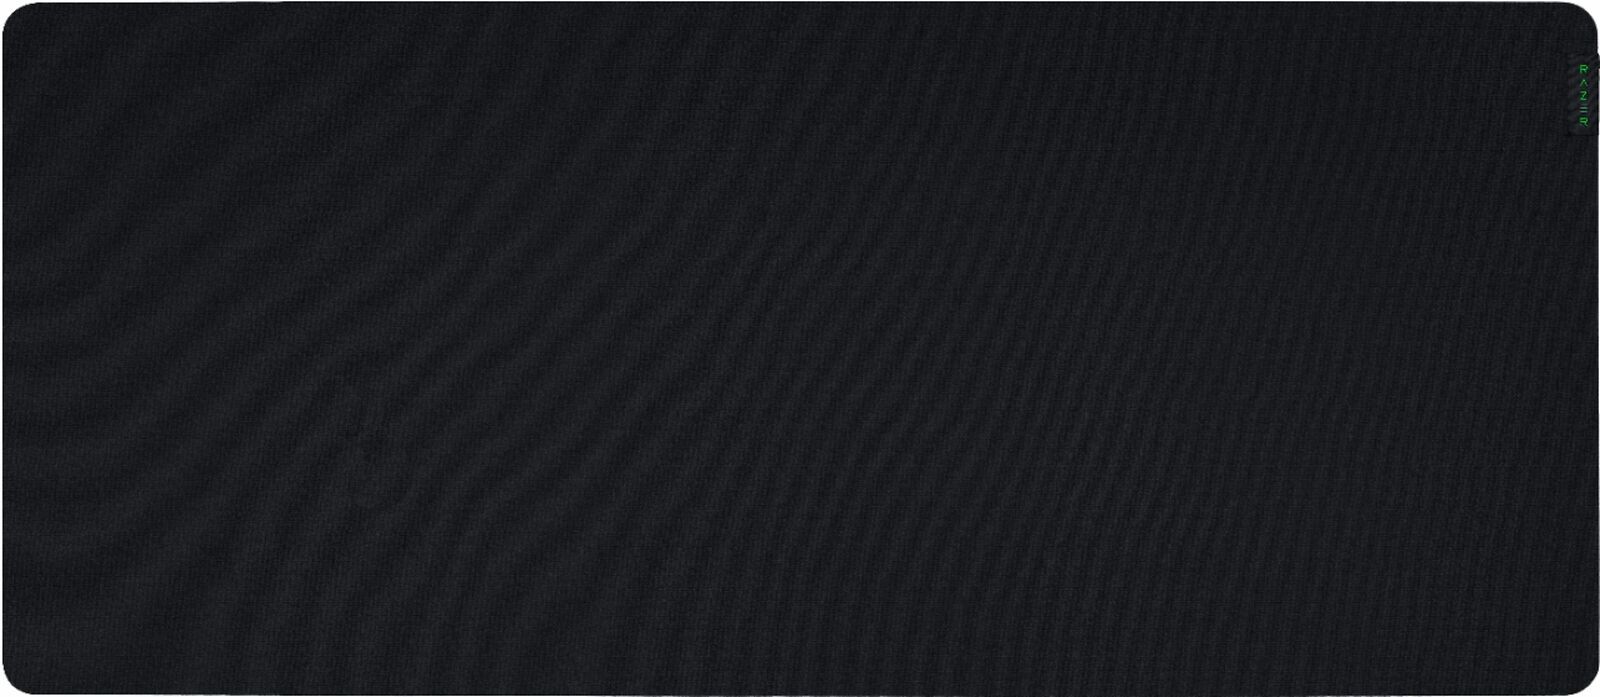 Primary image for Razer - Gigantus V2 Cloth Gaming Mouse Pad (XXL) - Black